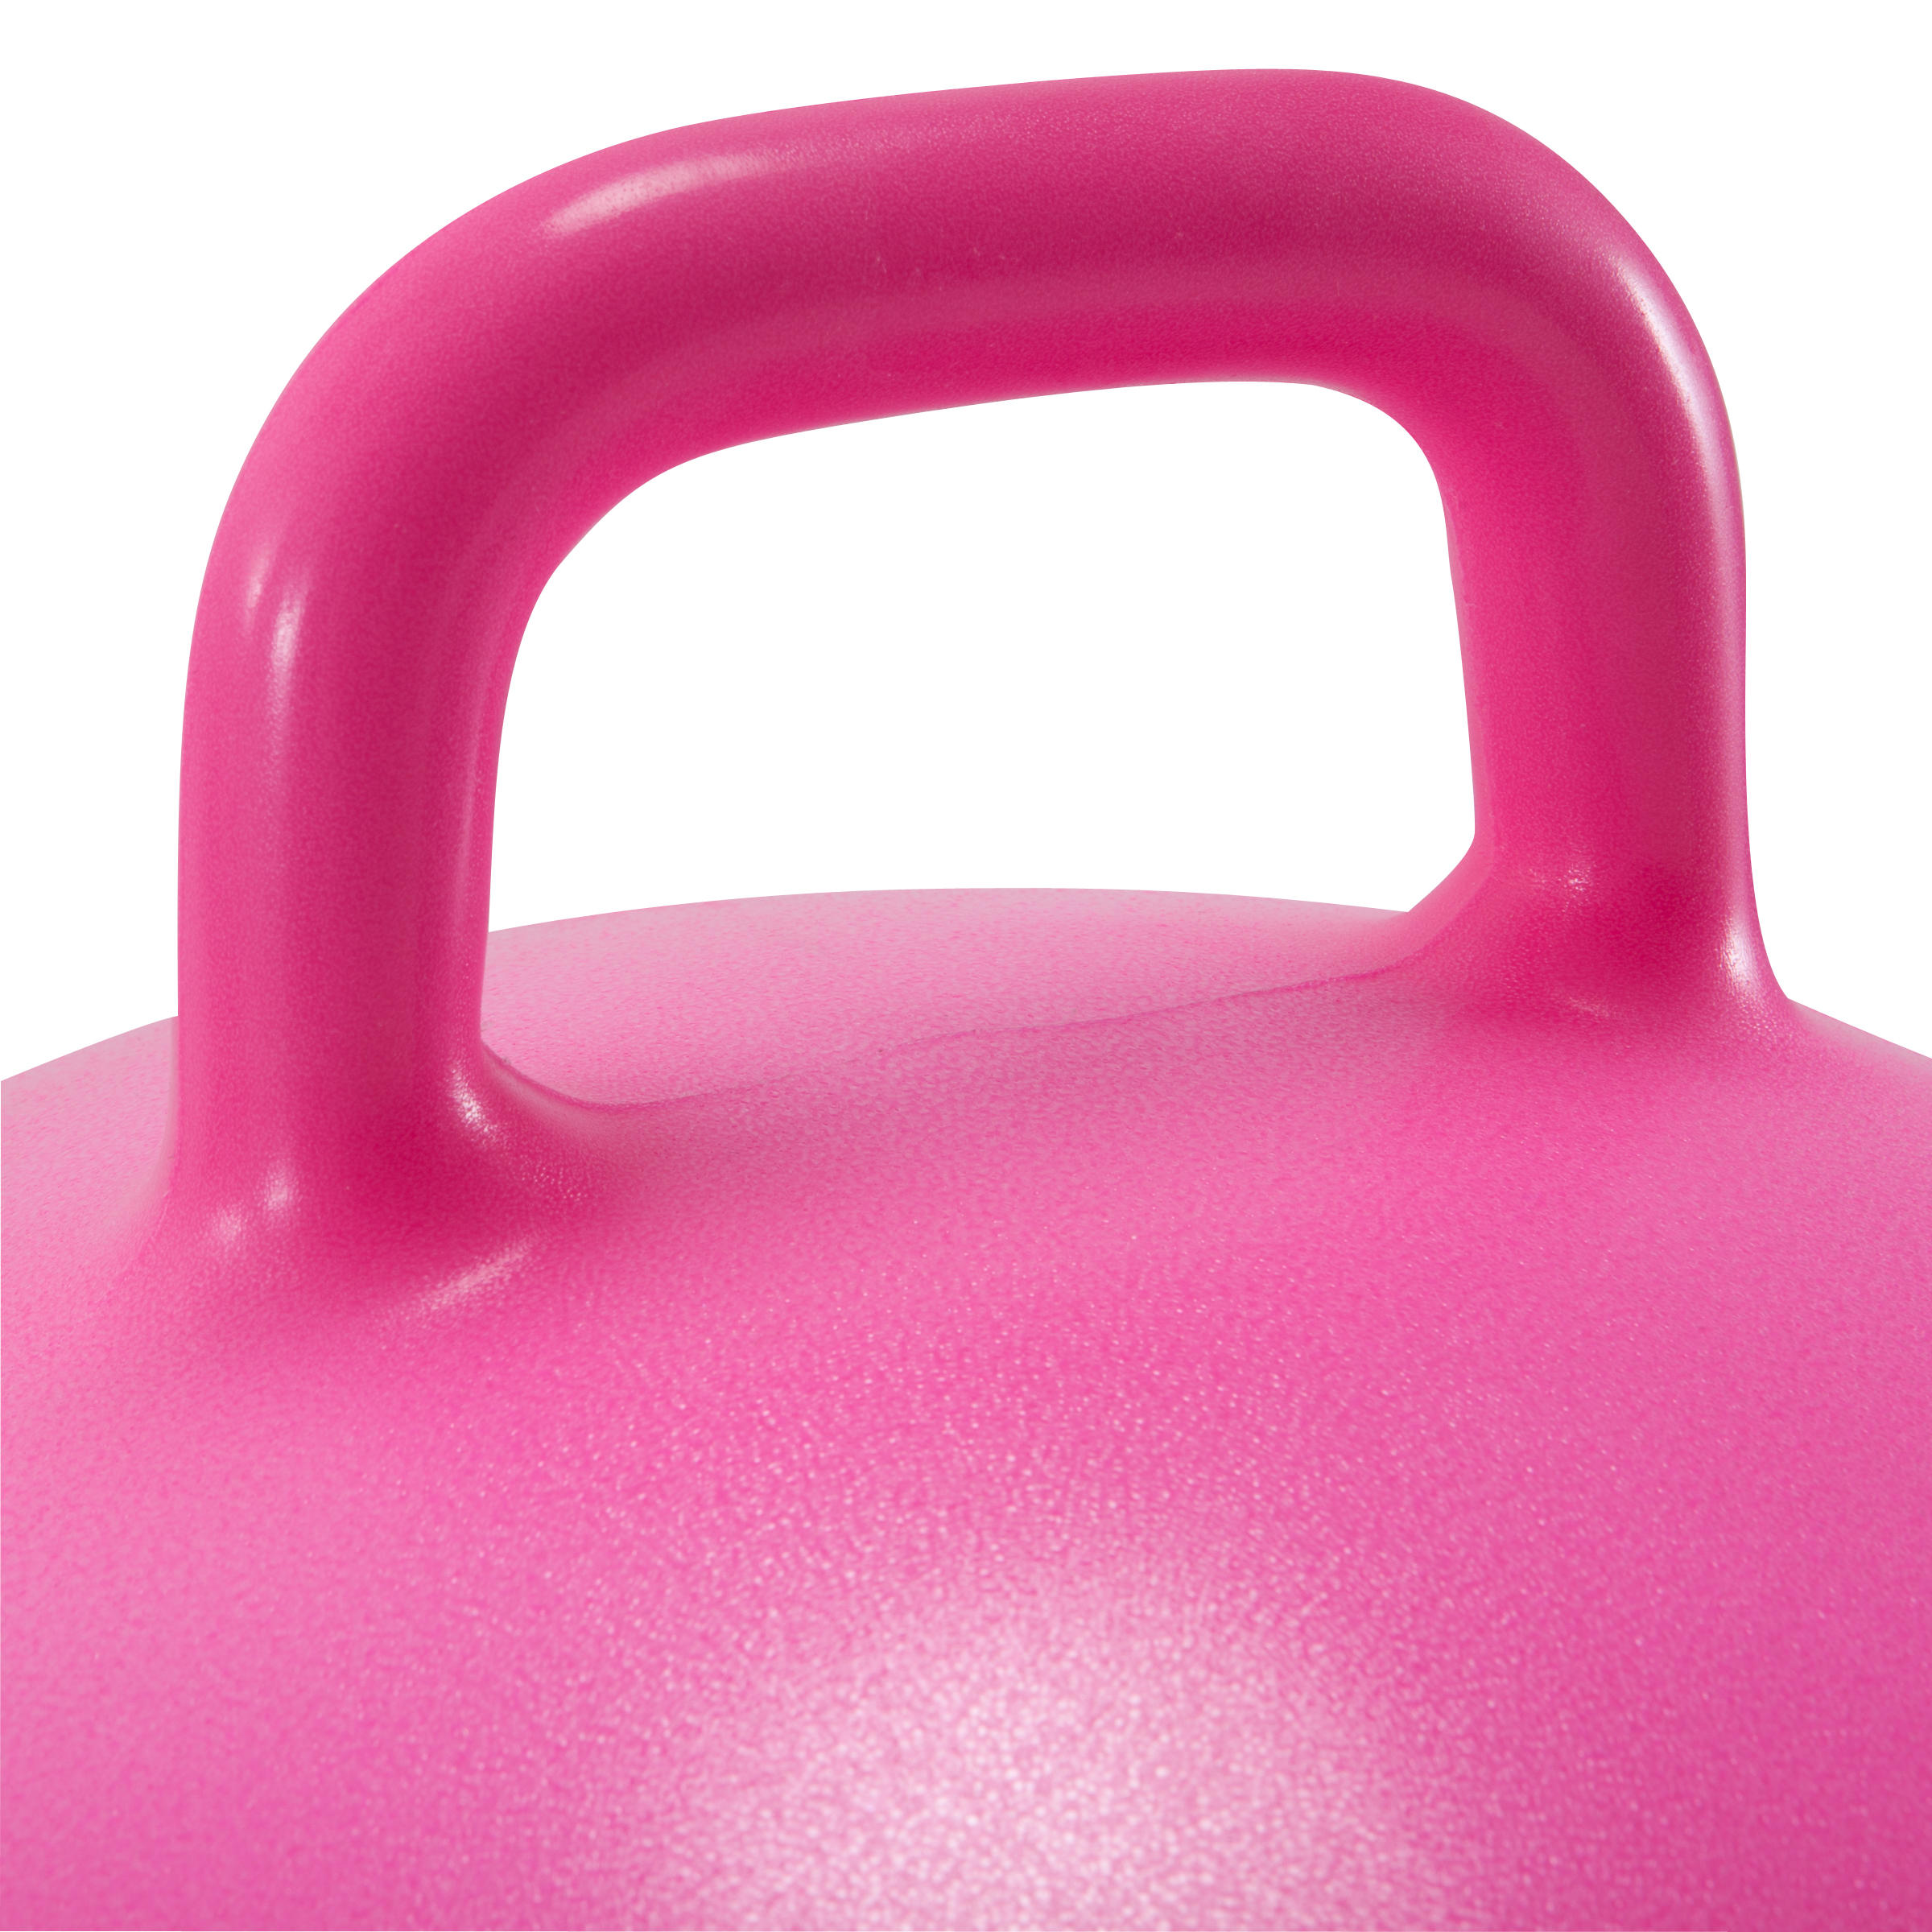 Resist 60 cm Kids' Gym Space Hopper - Pink 5/6